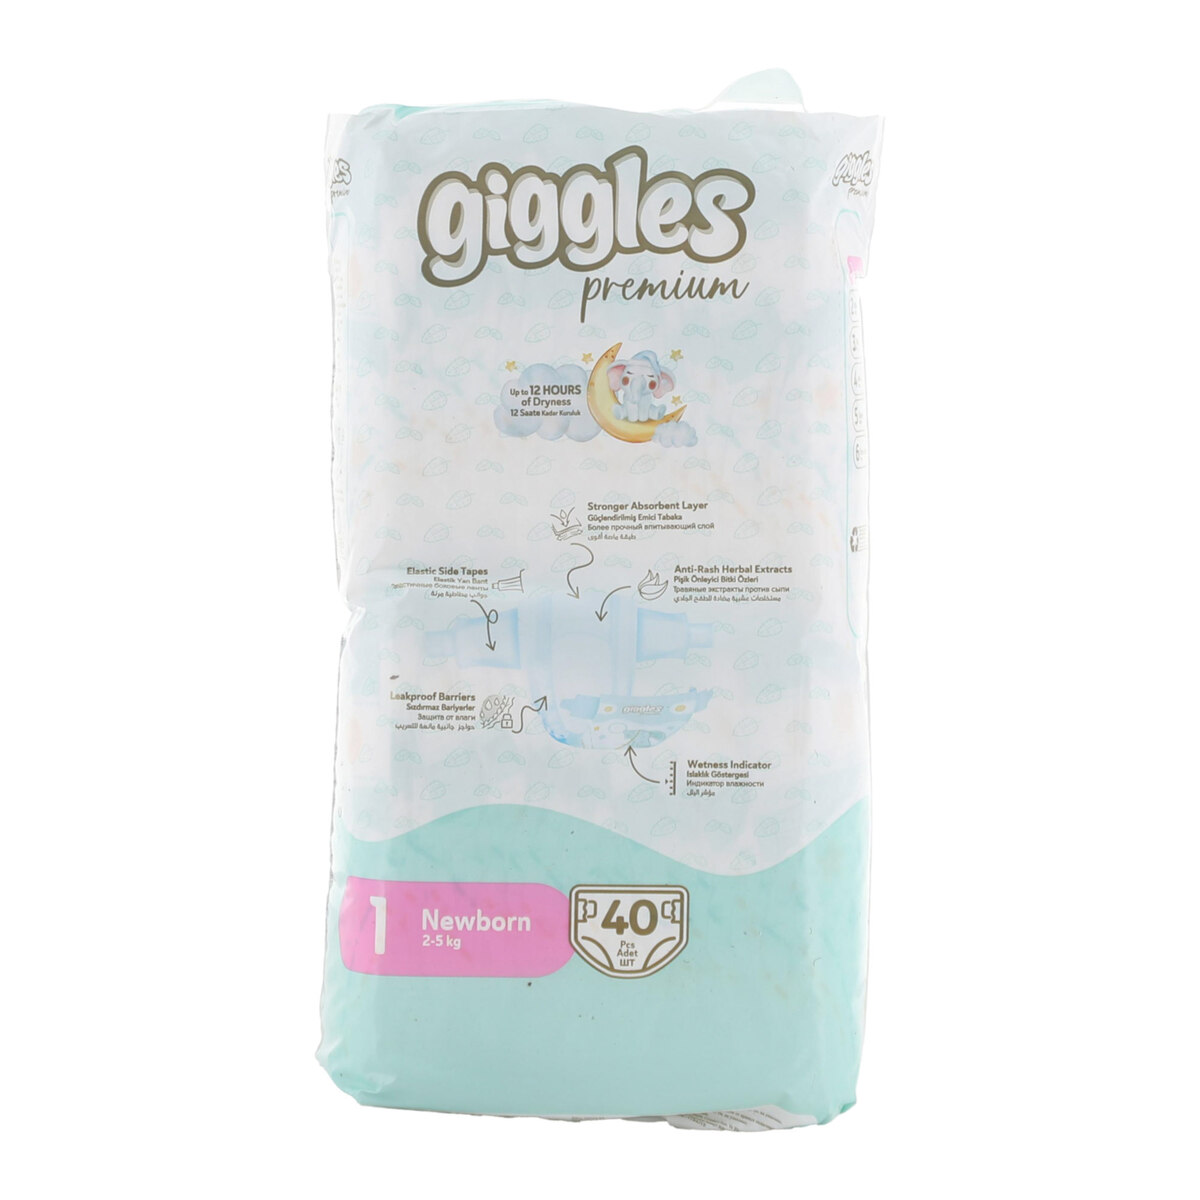 Giggles Premium Newborn Baby Diaper Size 1 2-5kg 40 pcs